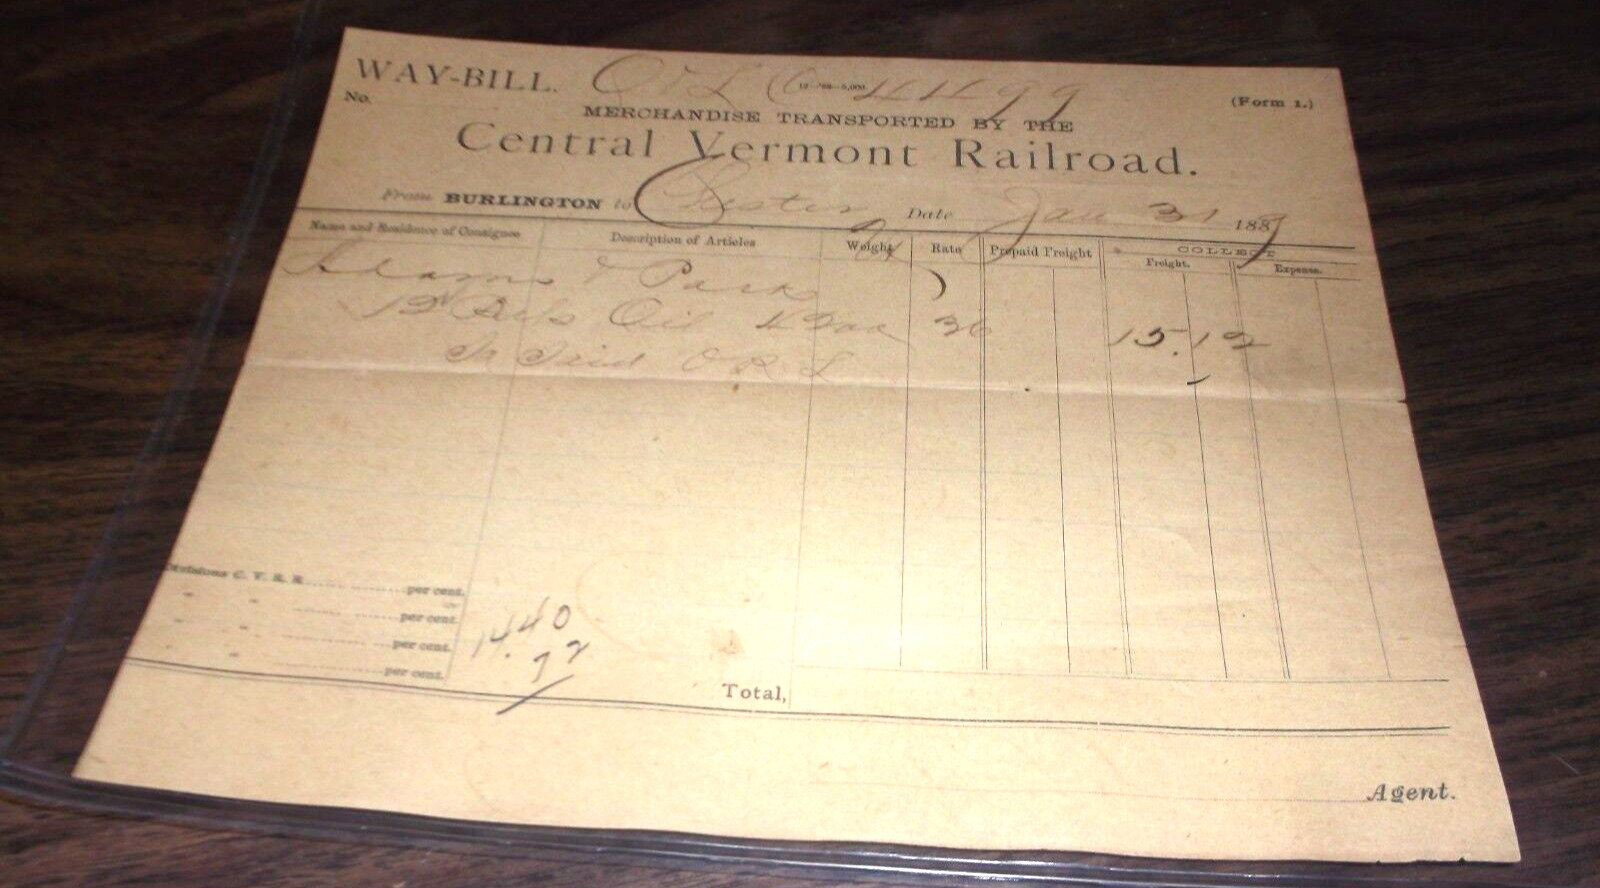 JANUARY 1889 CENTRAL VERMONT RAILROAD WAY BILL BURLINGTON VERMONT